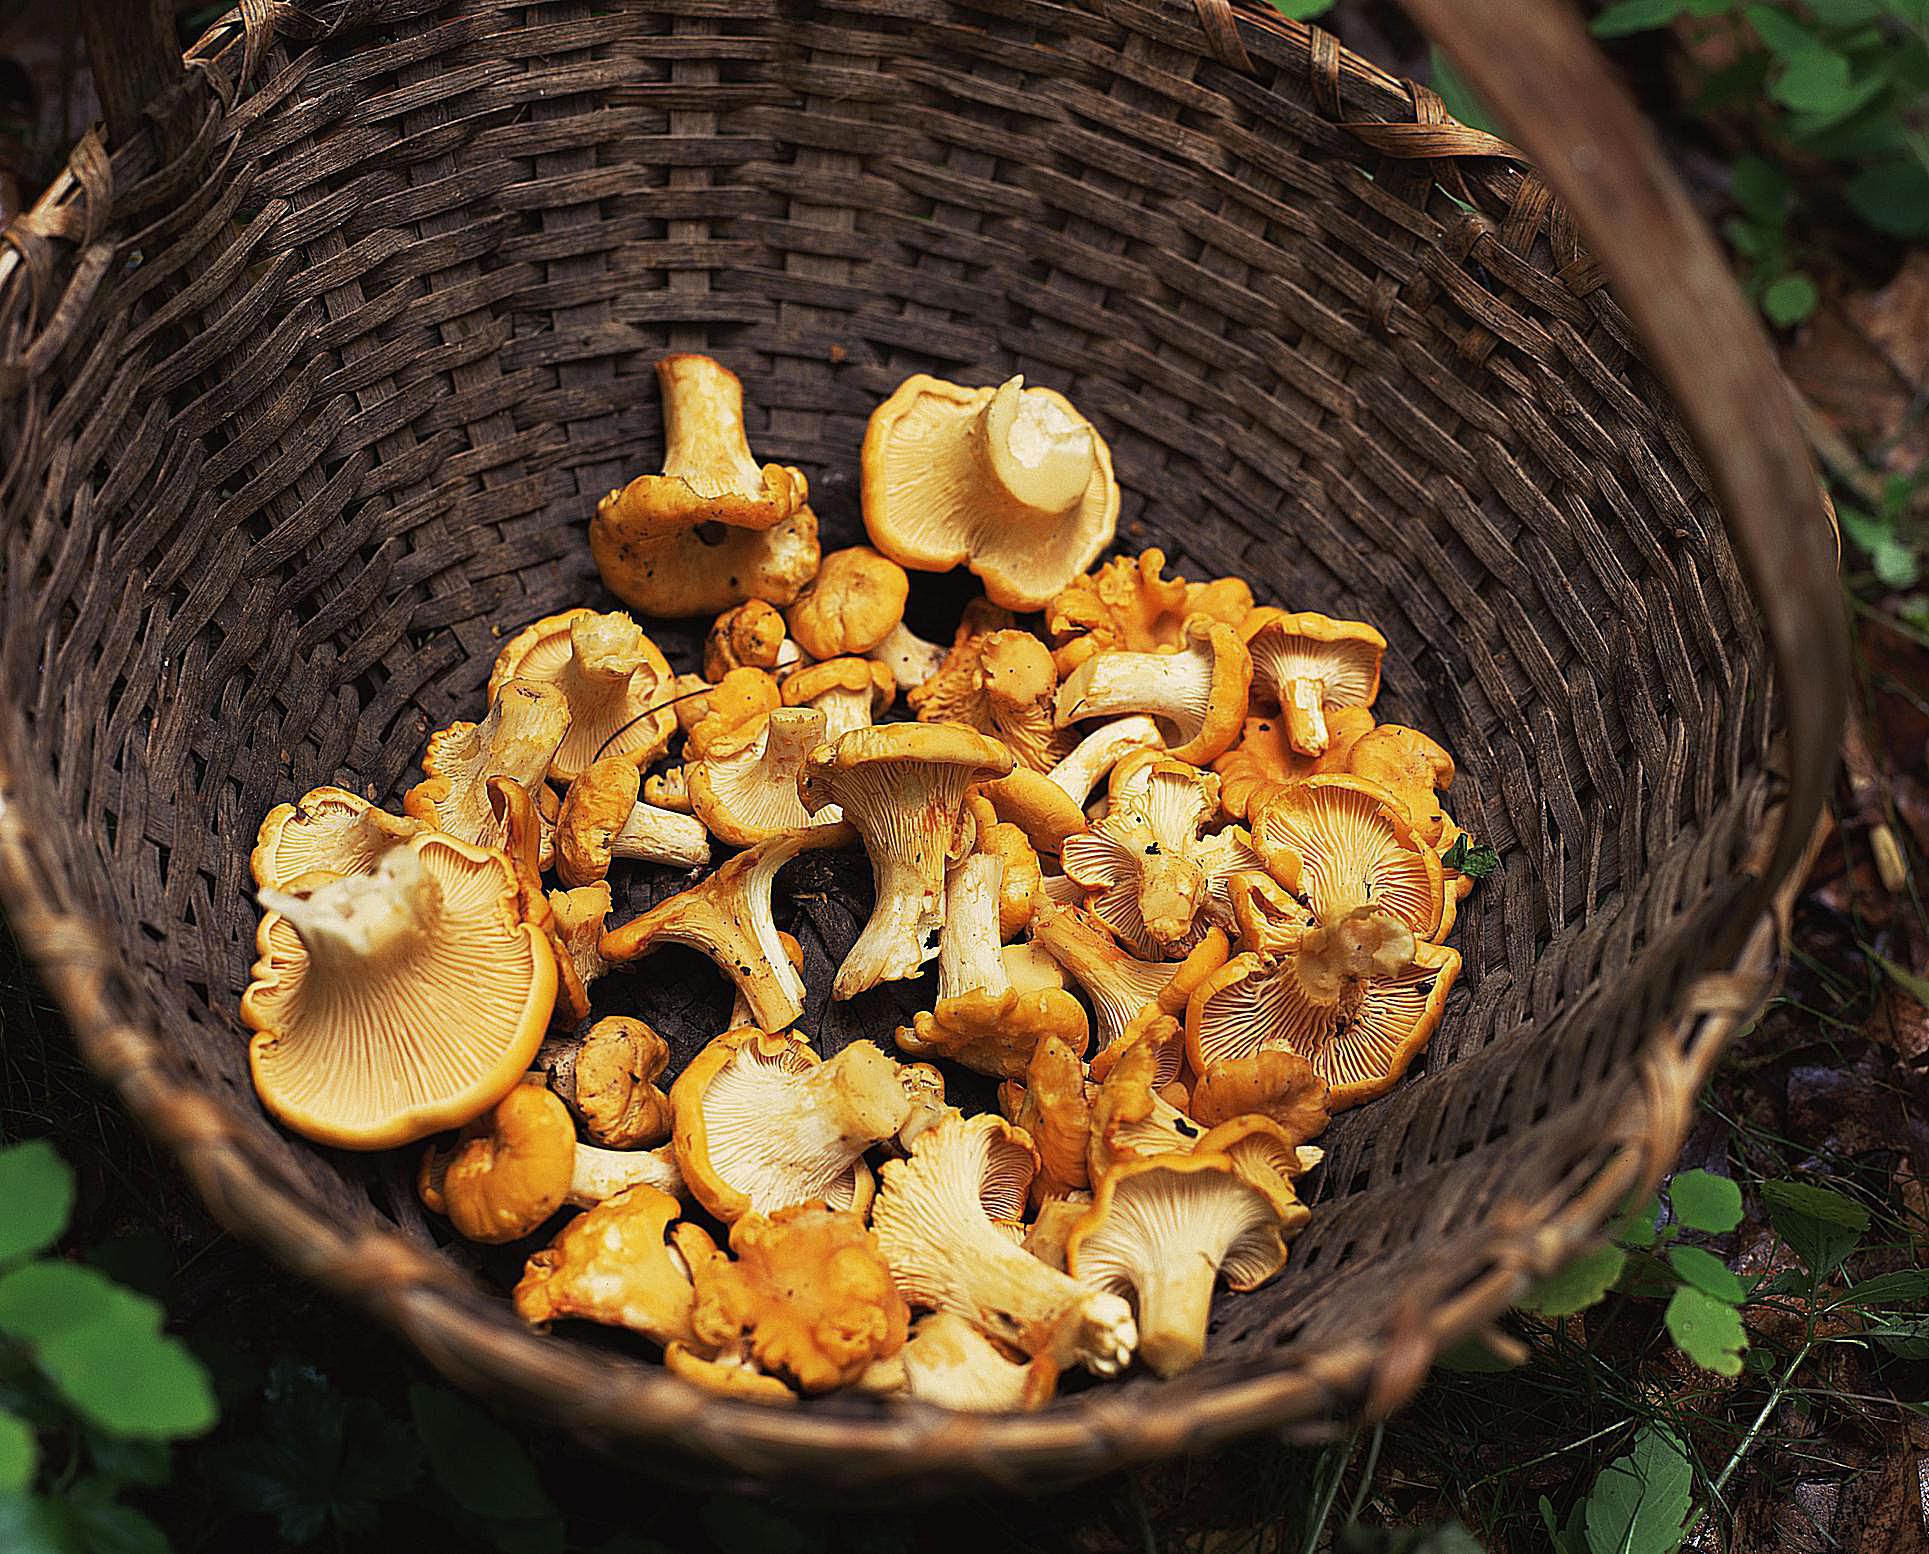 Chanterelle mushrooms in a basket